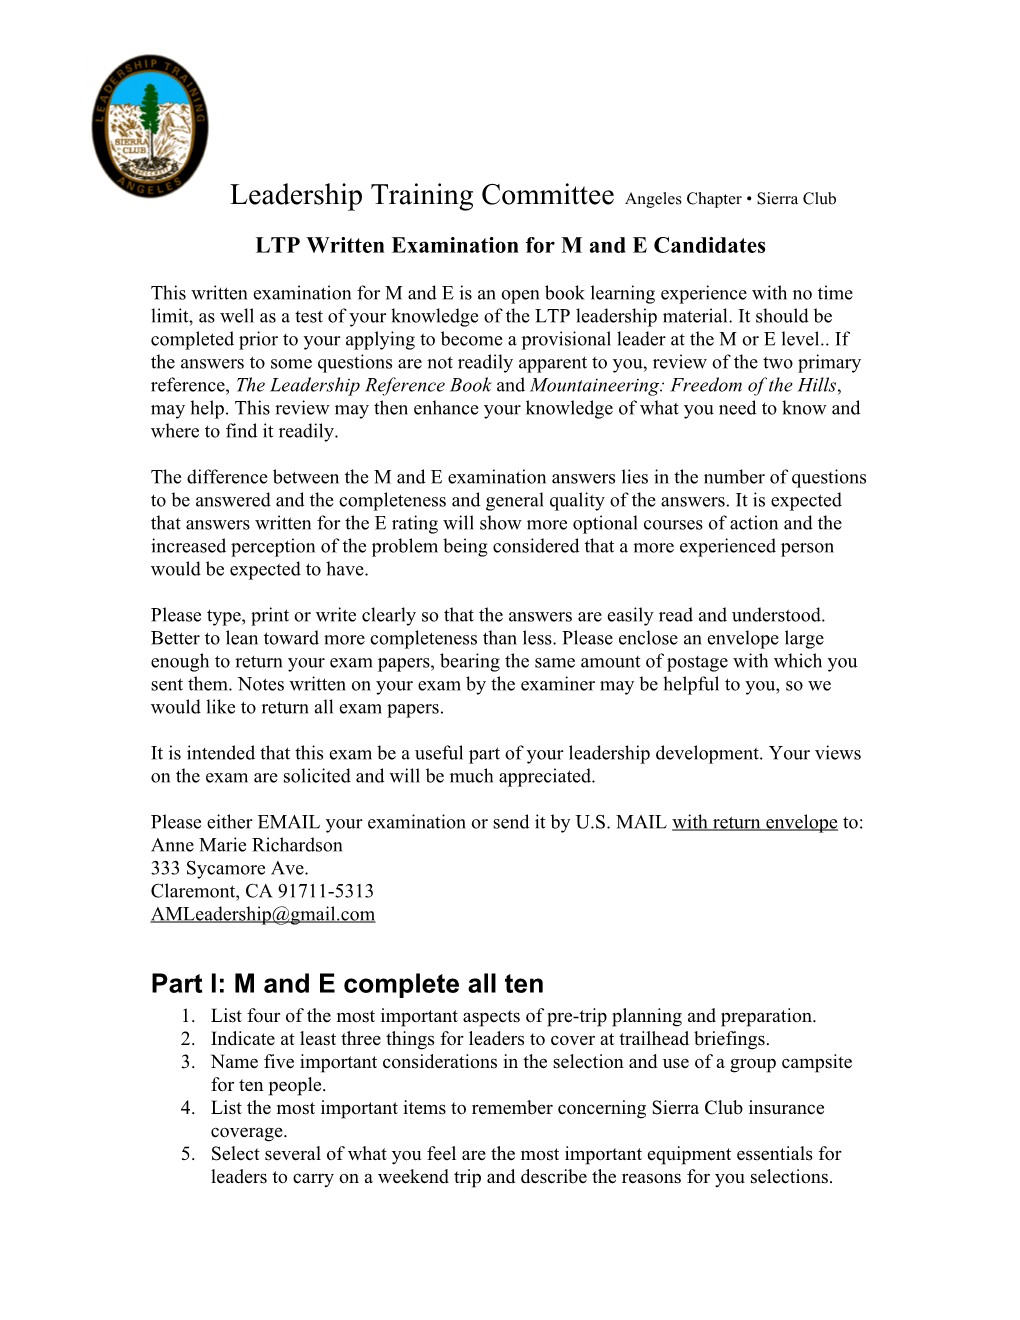 Leadership Training Program